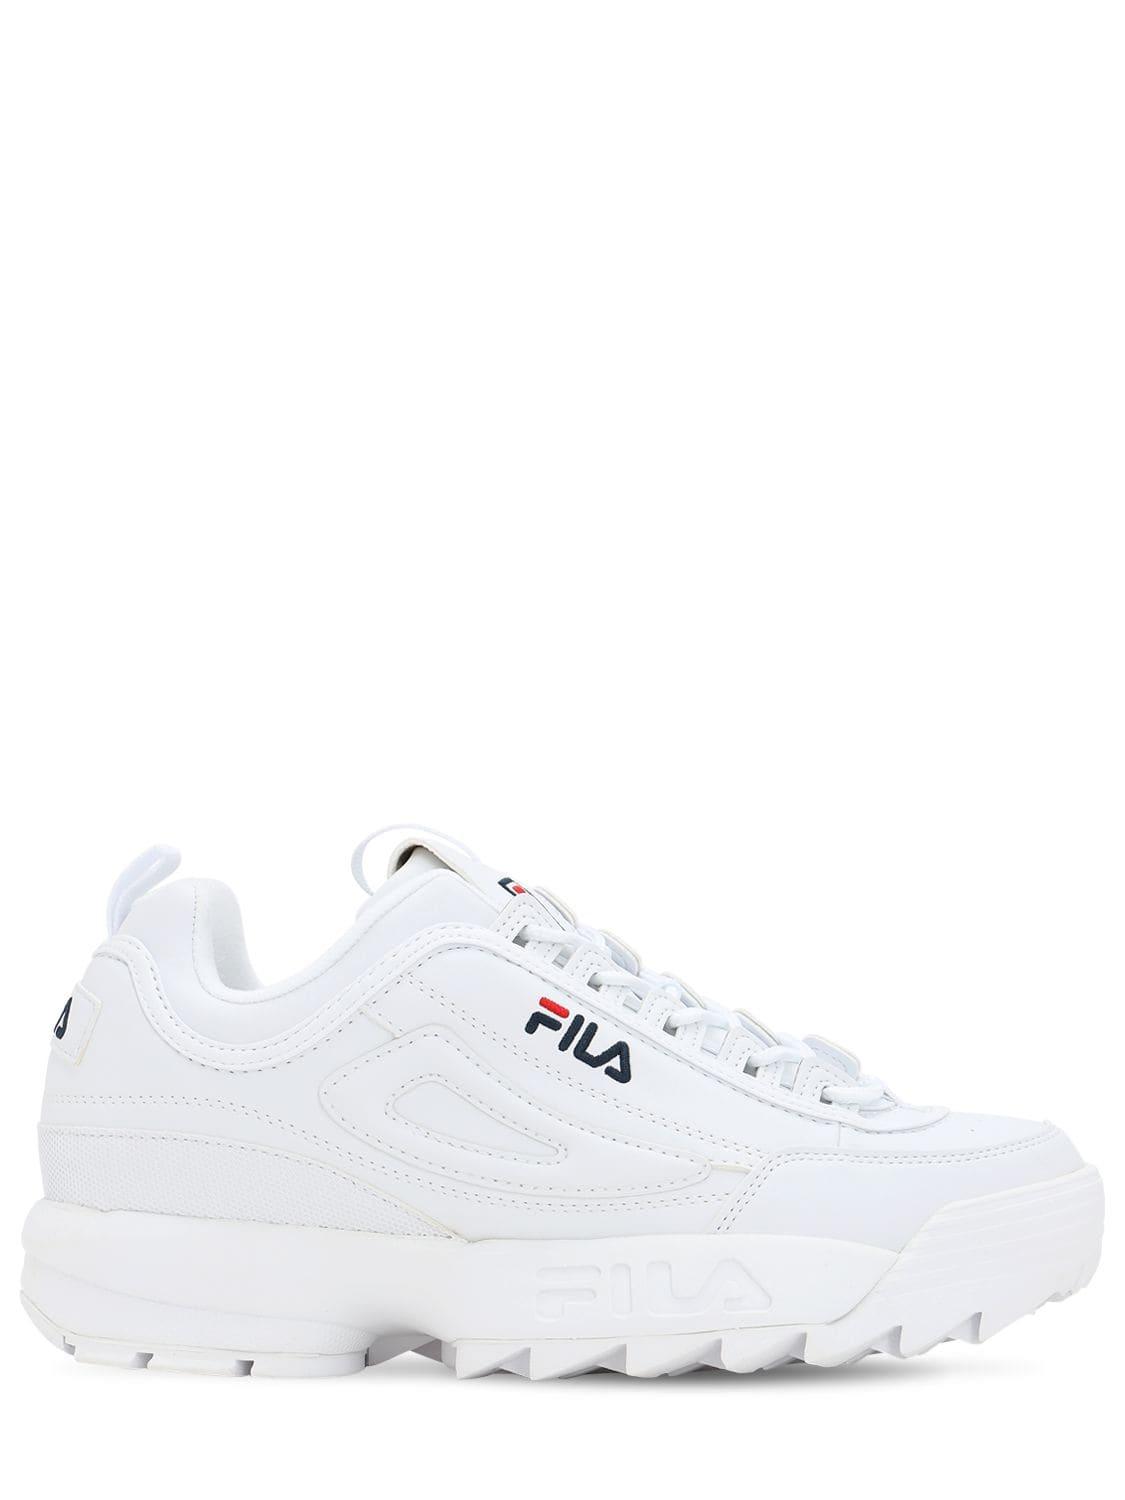 foredrag Nebu Blive kold Fila Disruptor Low Sneaker in White Black (White) for Men - Lyst